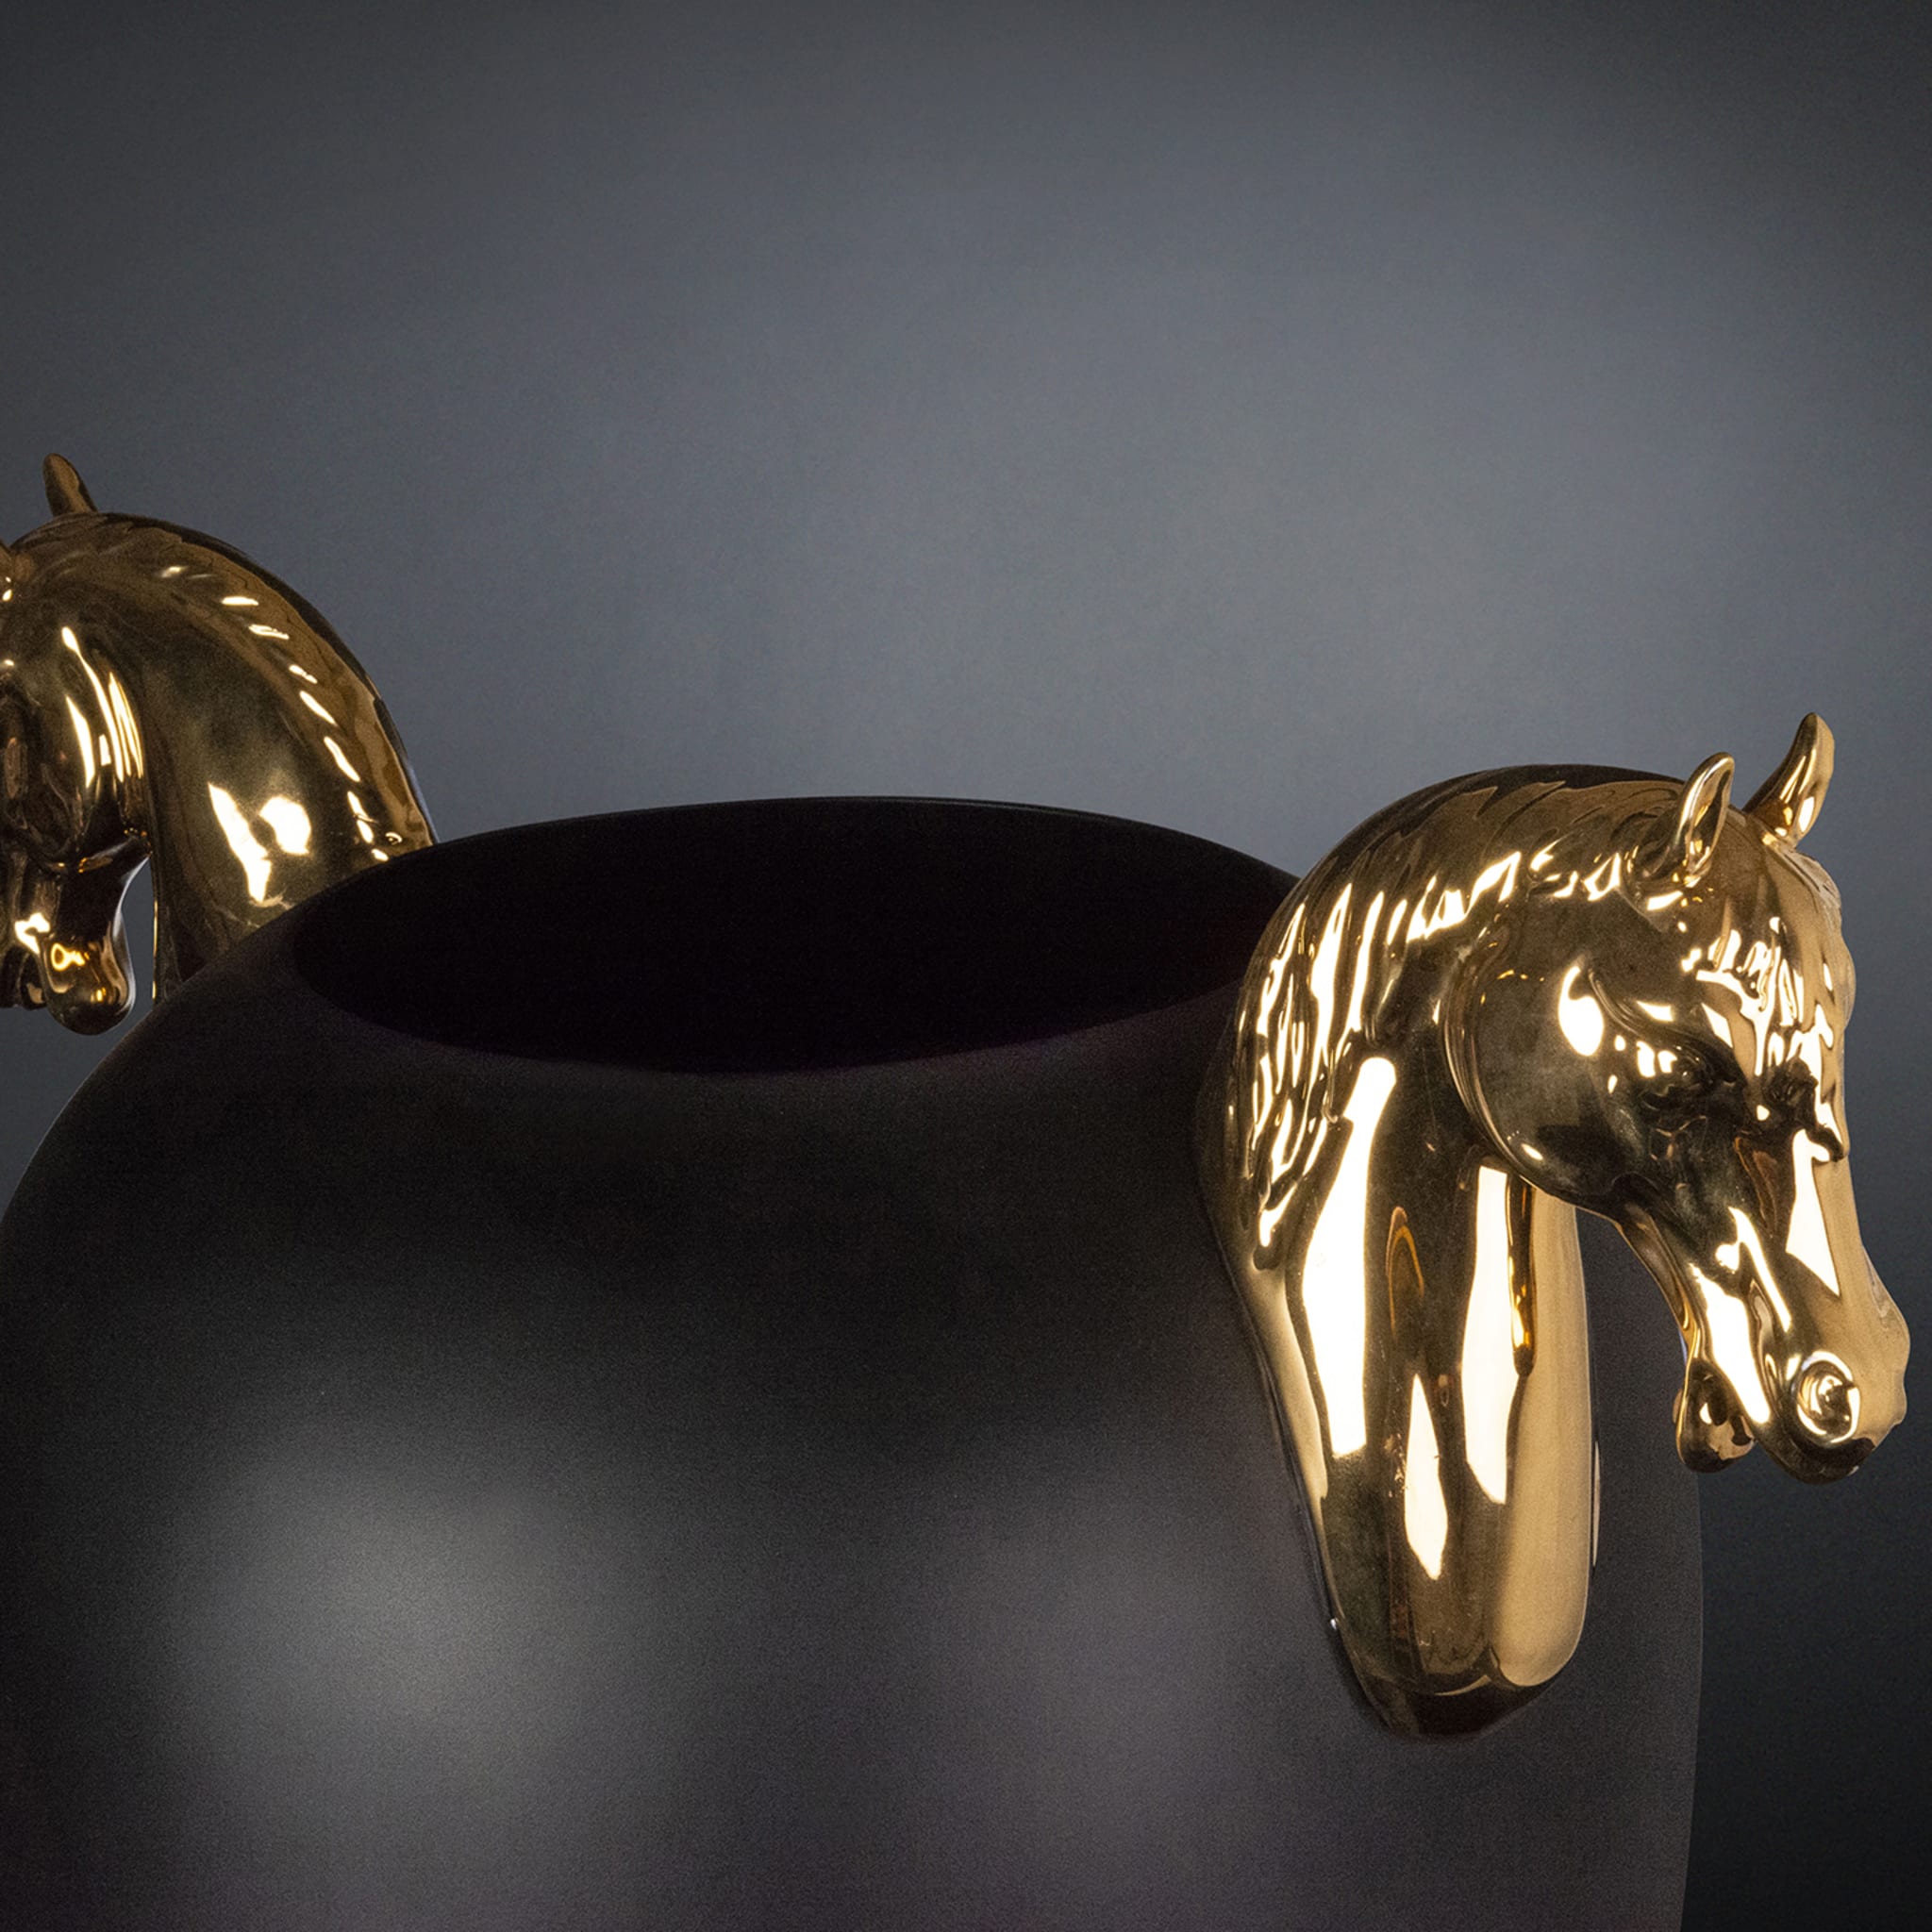 Grand vase noir et or brillant en forme de cheval - Vue alternative 1